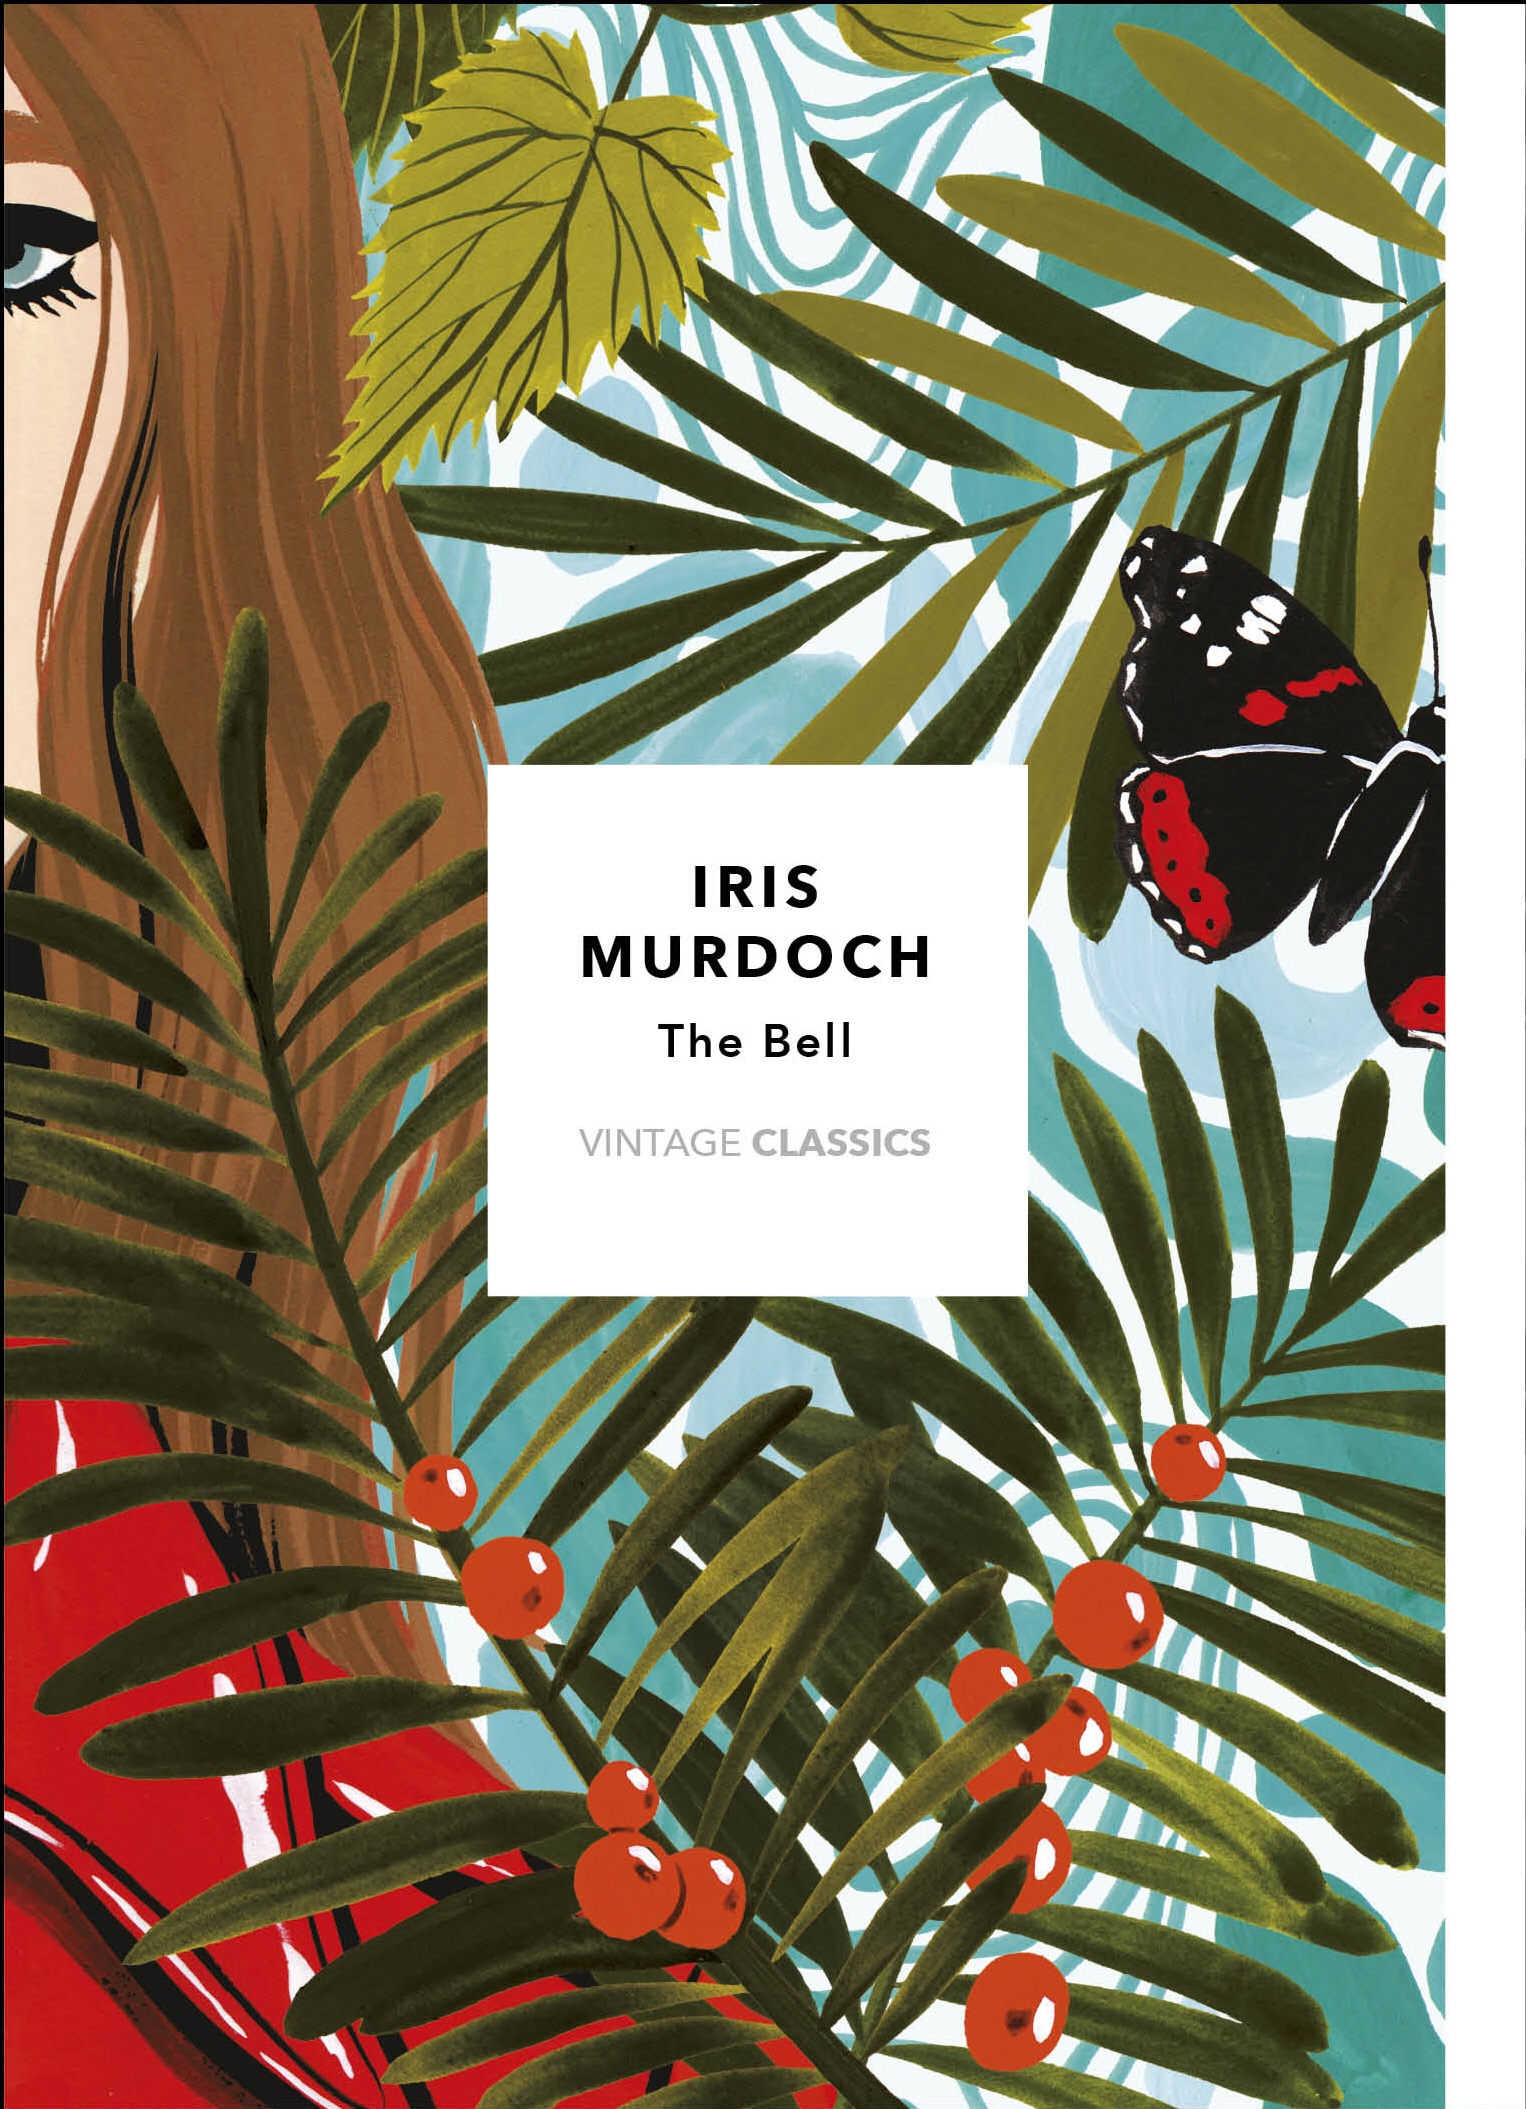 Book “The Bell (Vintage Classics Murdoch Series)” by Iris Murdoch, Sarah Perry — July 4, 2019